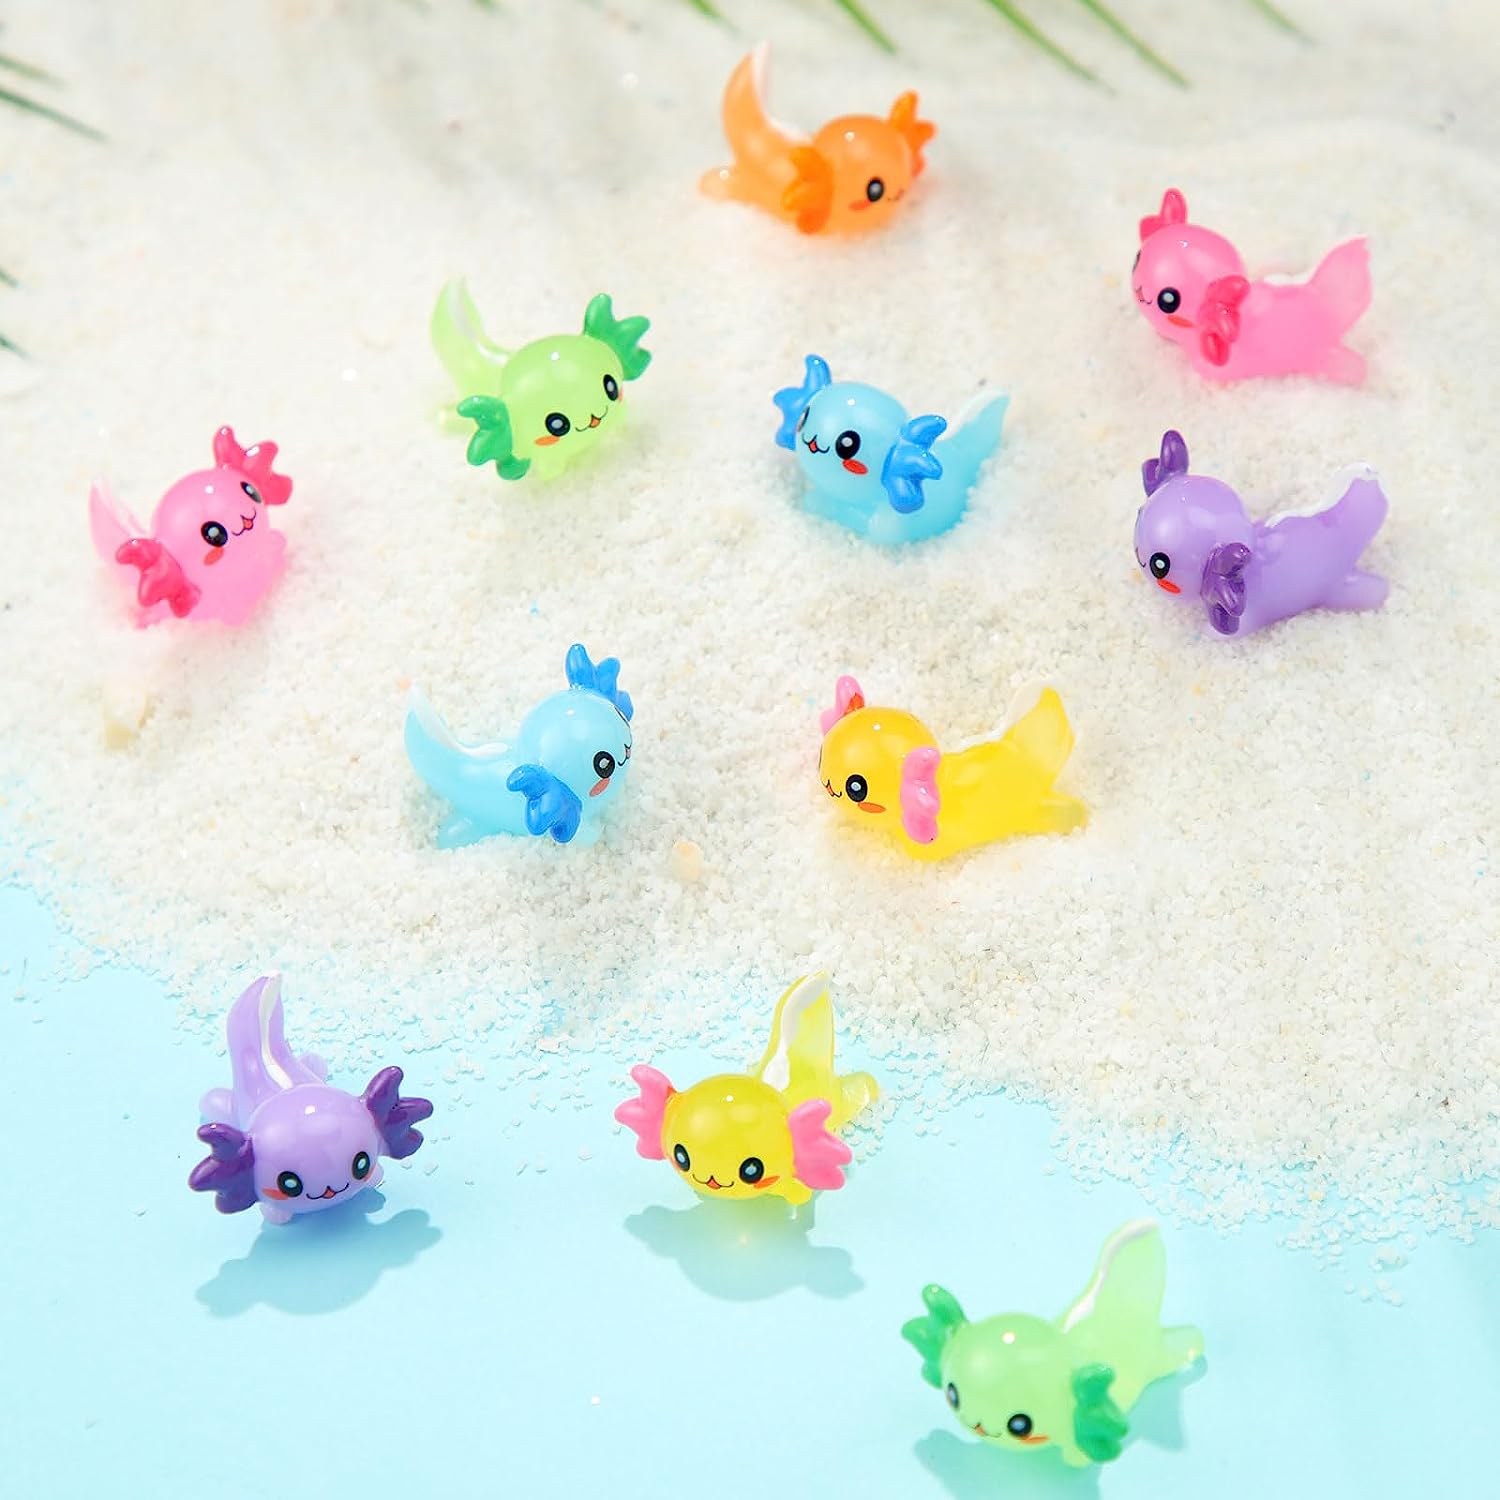 Axolotl Figurines - Cute Little Animal Figures for Decoration